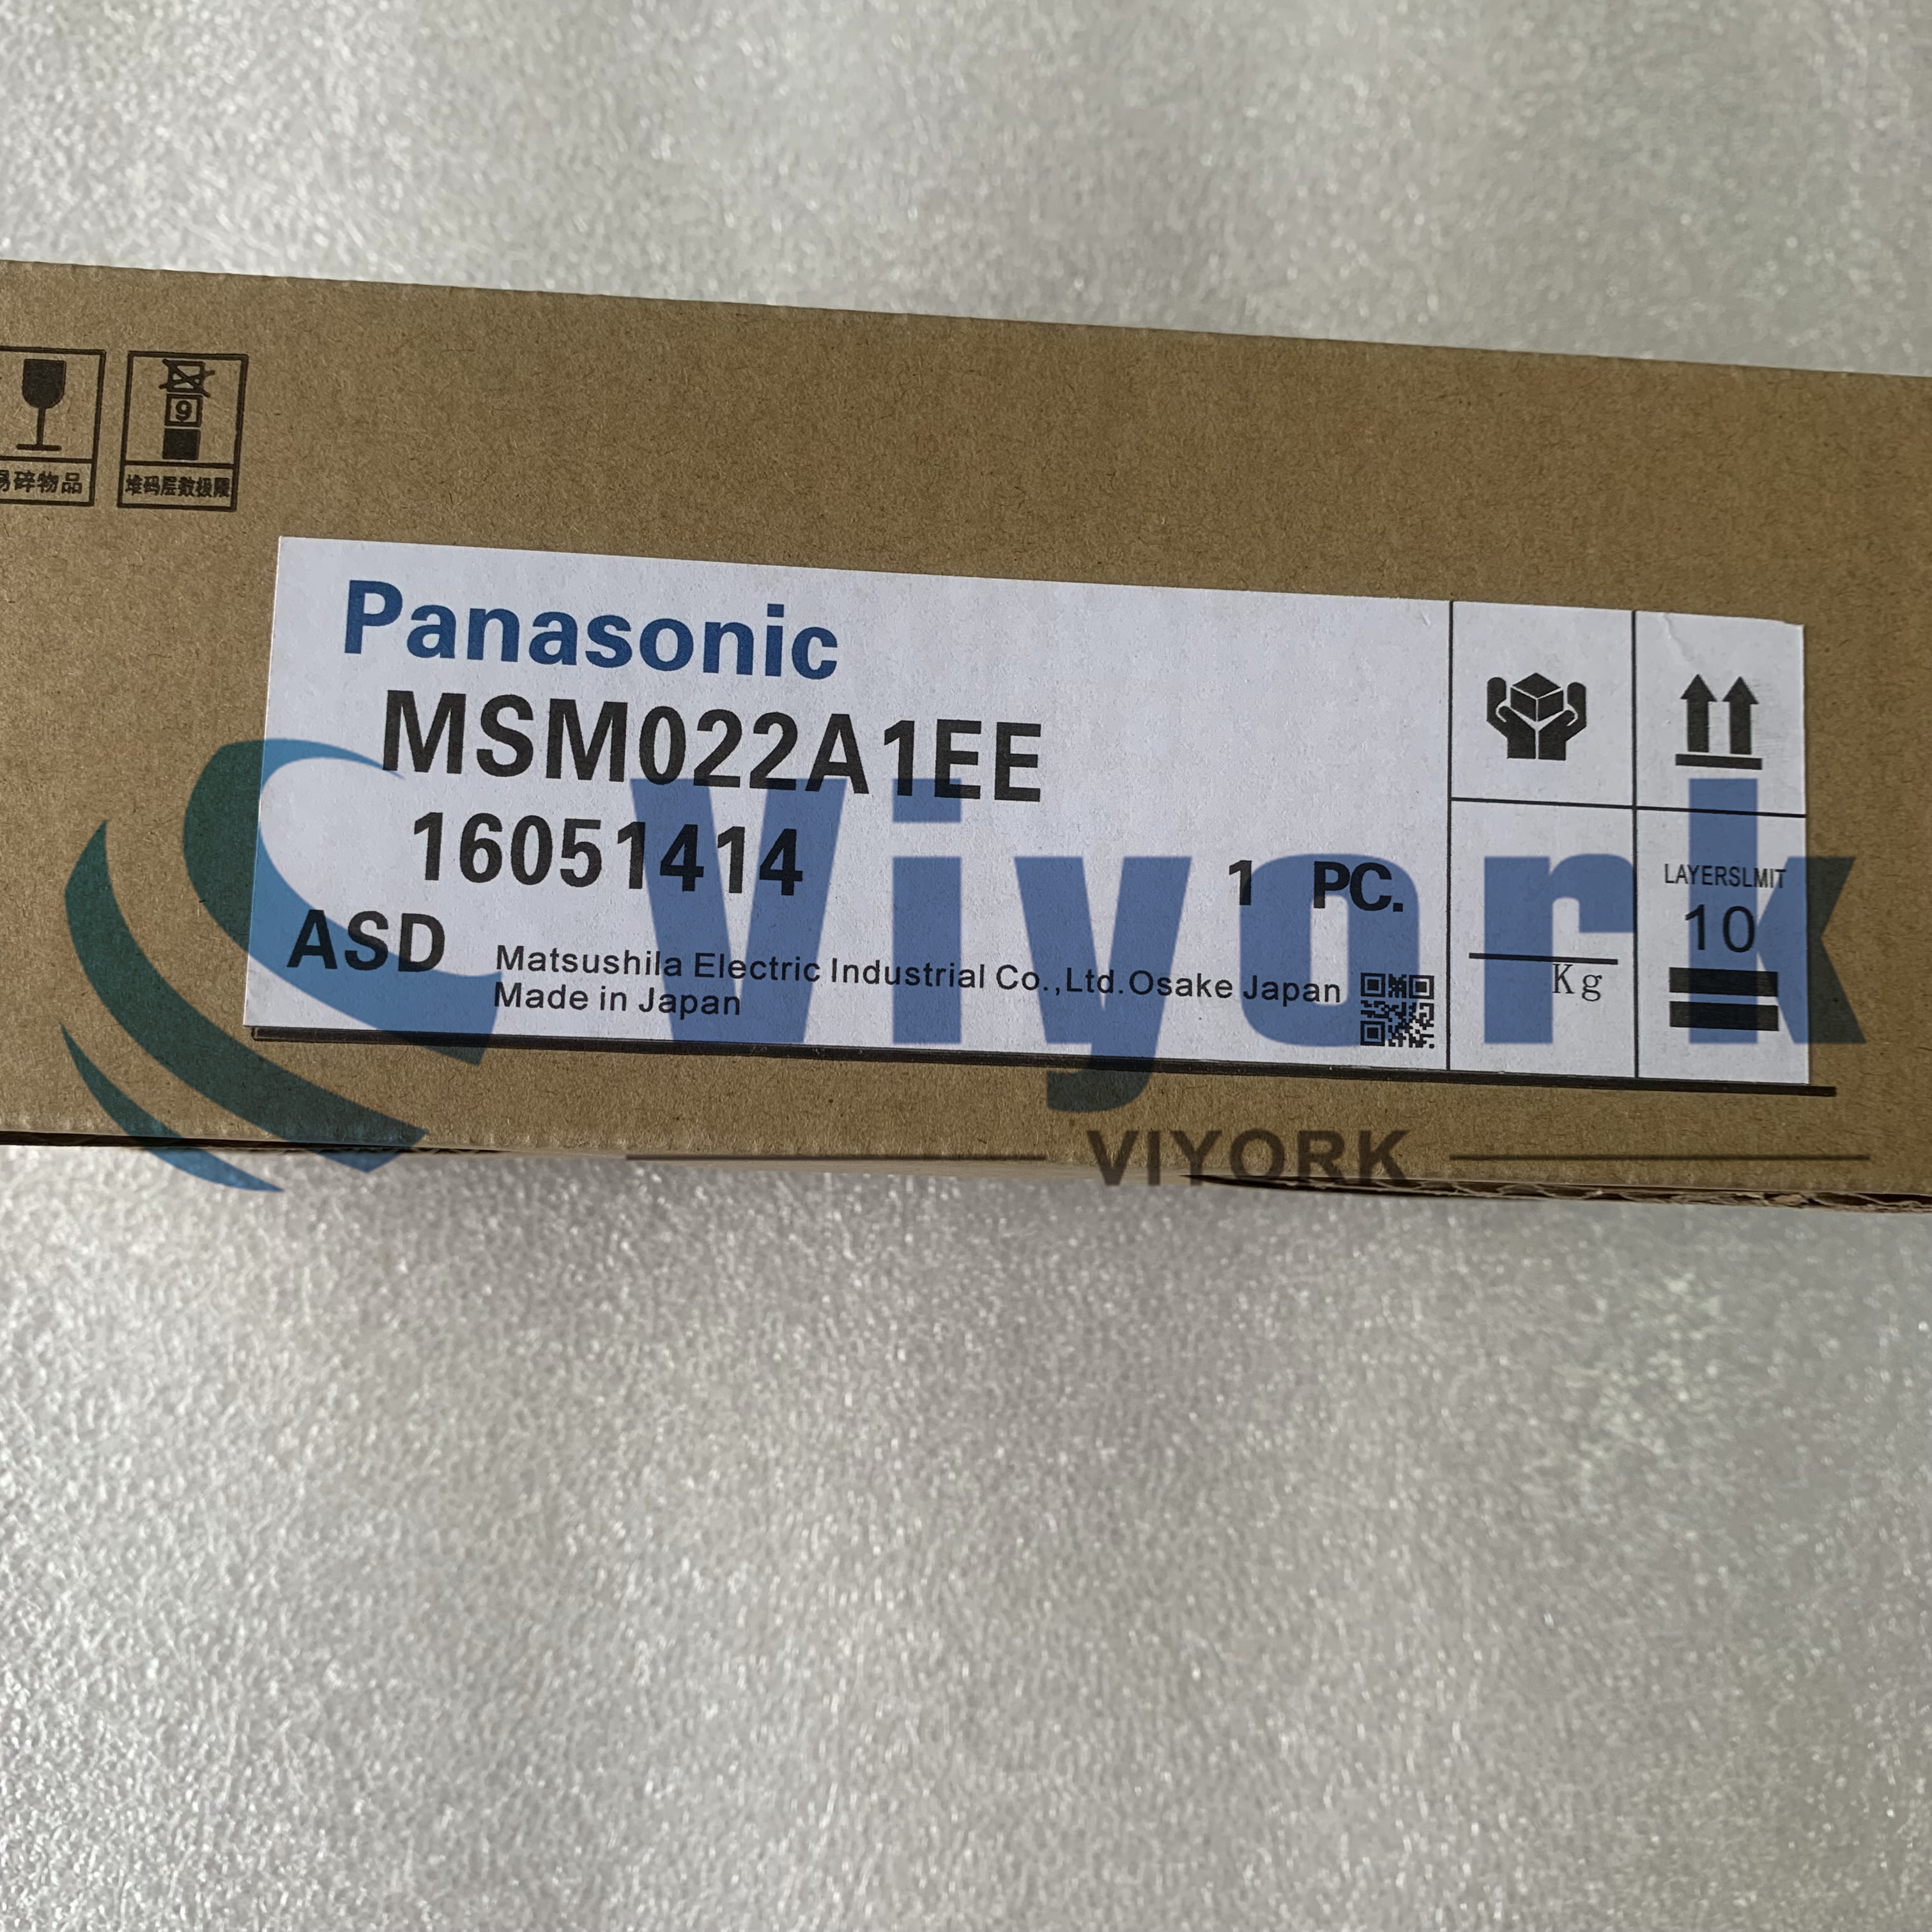 Panasonic MSM022A1EE AC SERVO MOTOR MINAS EX SERIES LOW INERTIA 200VAC 200W NEW